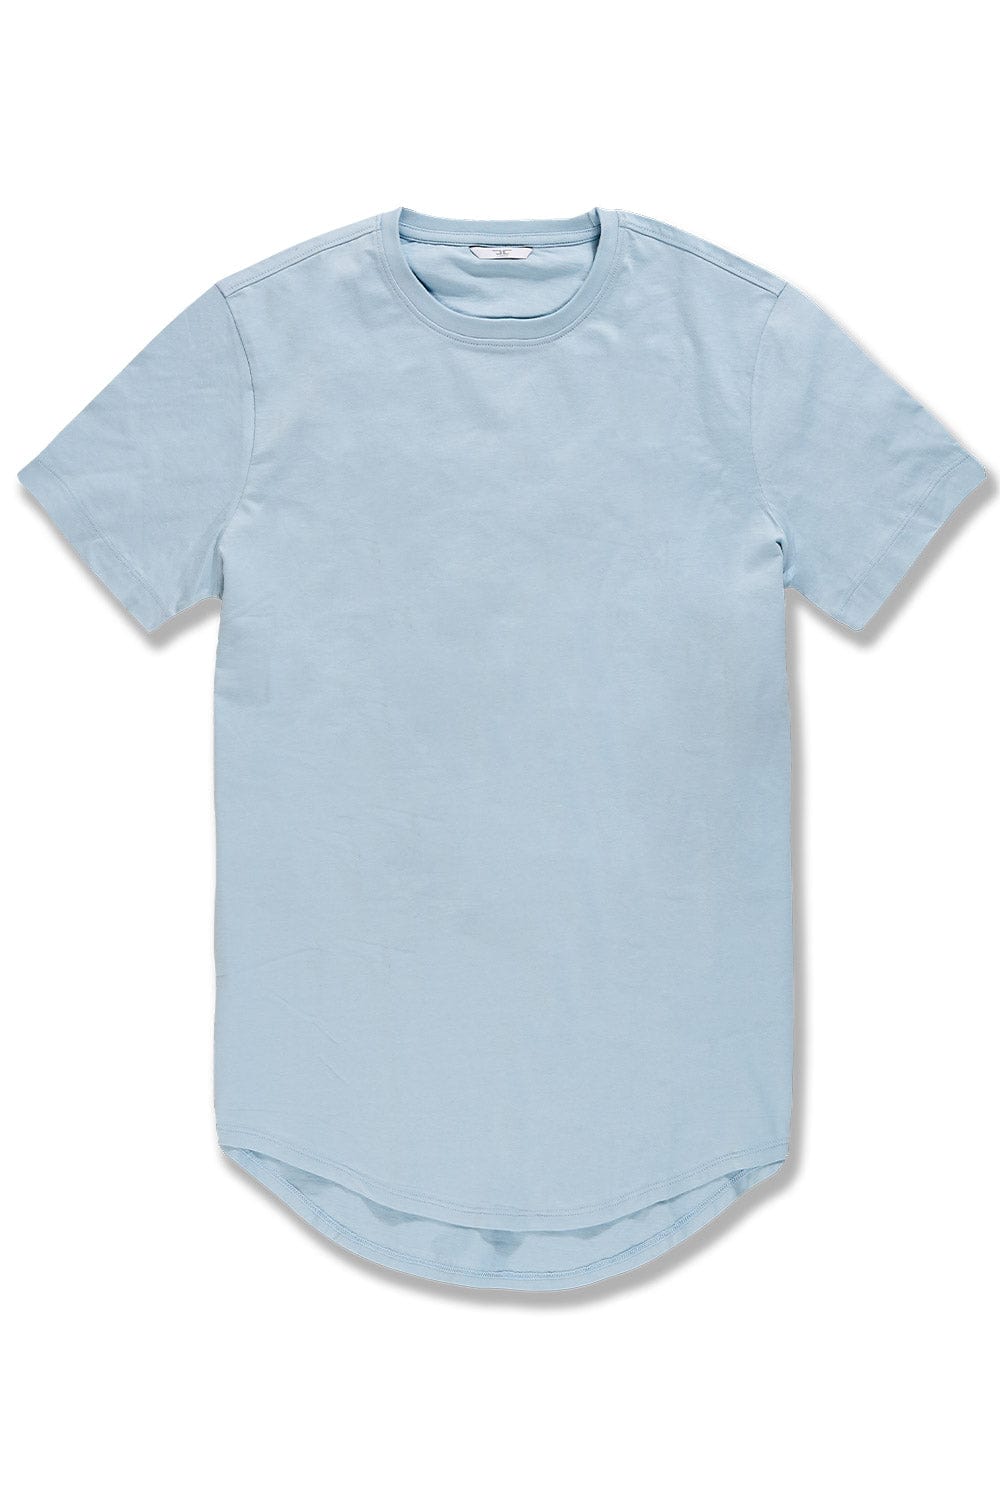 Jordan Craig Scallop T-Shirt Carolina Blue / S